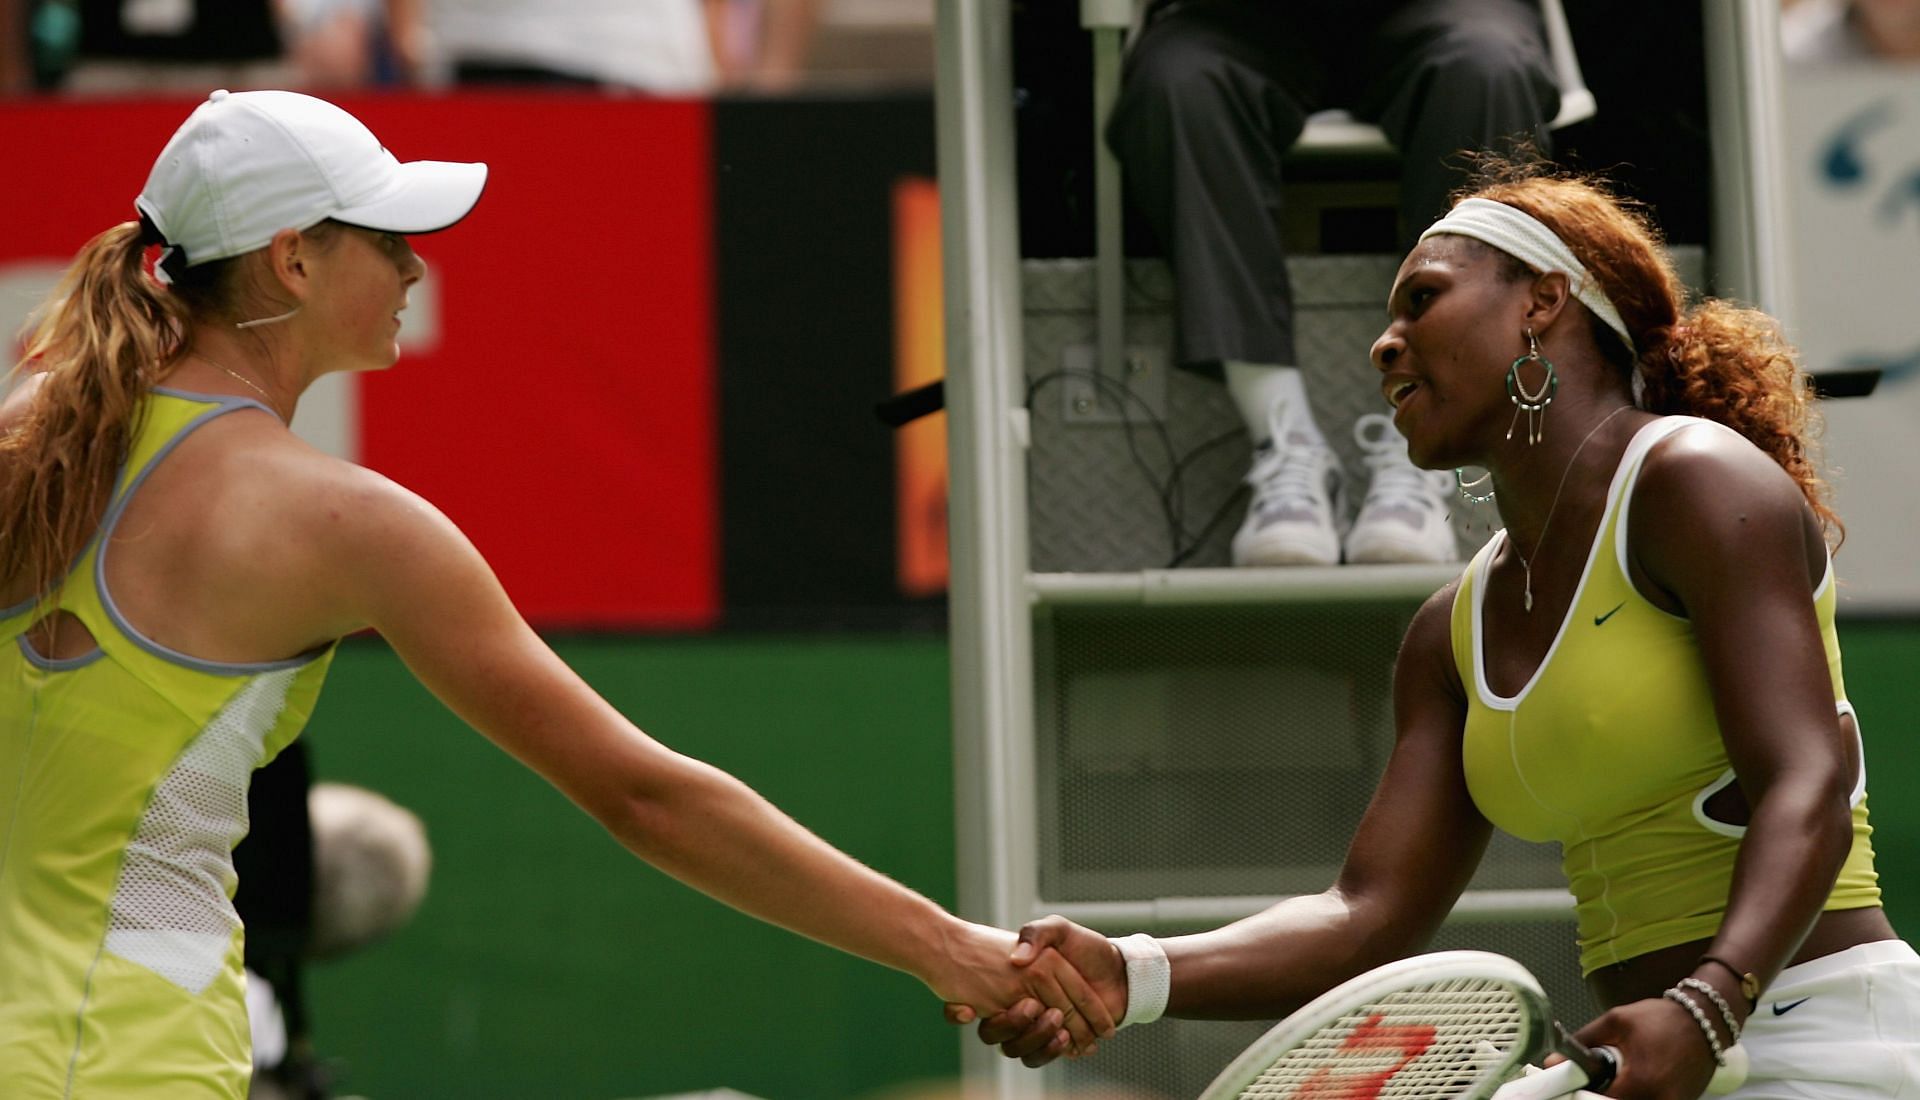 Maria Sharapova and Serena Williams at the 2005 Australian Open